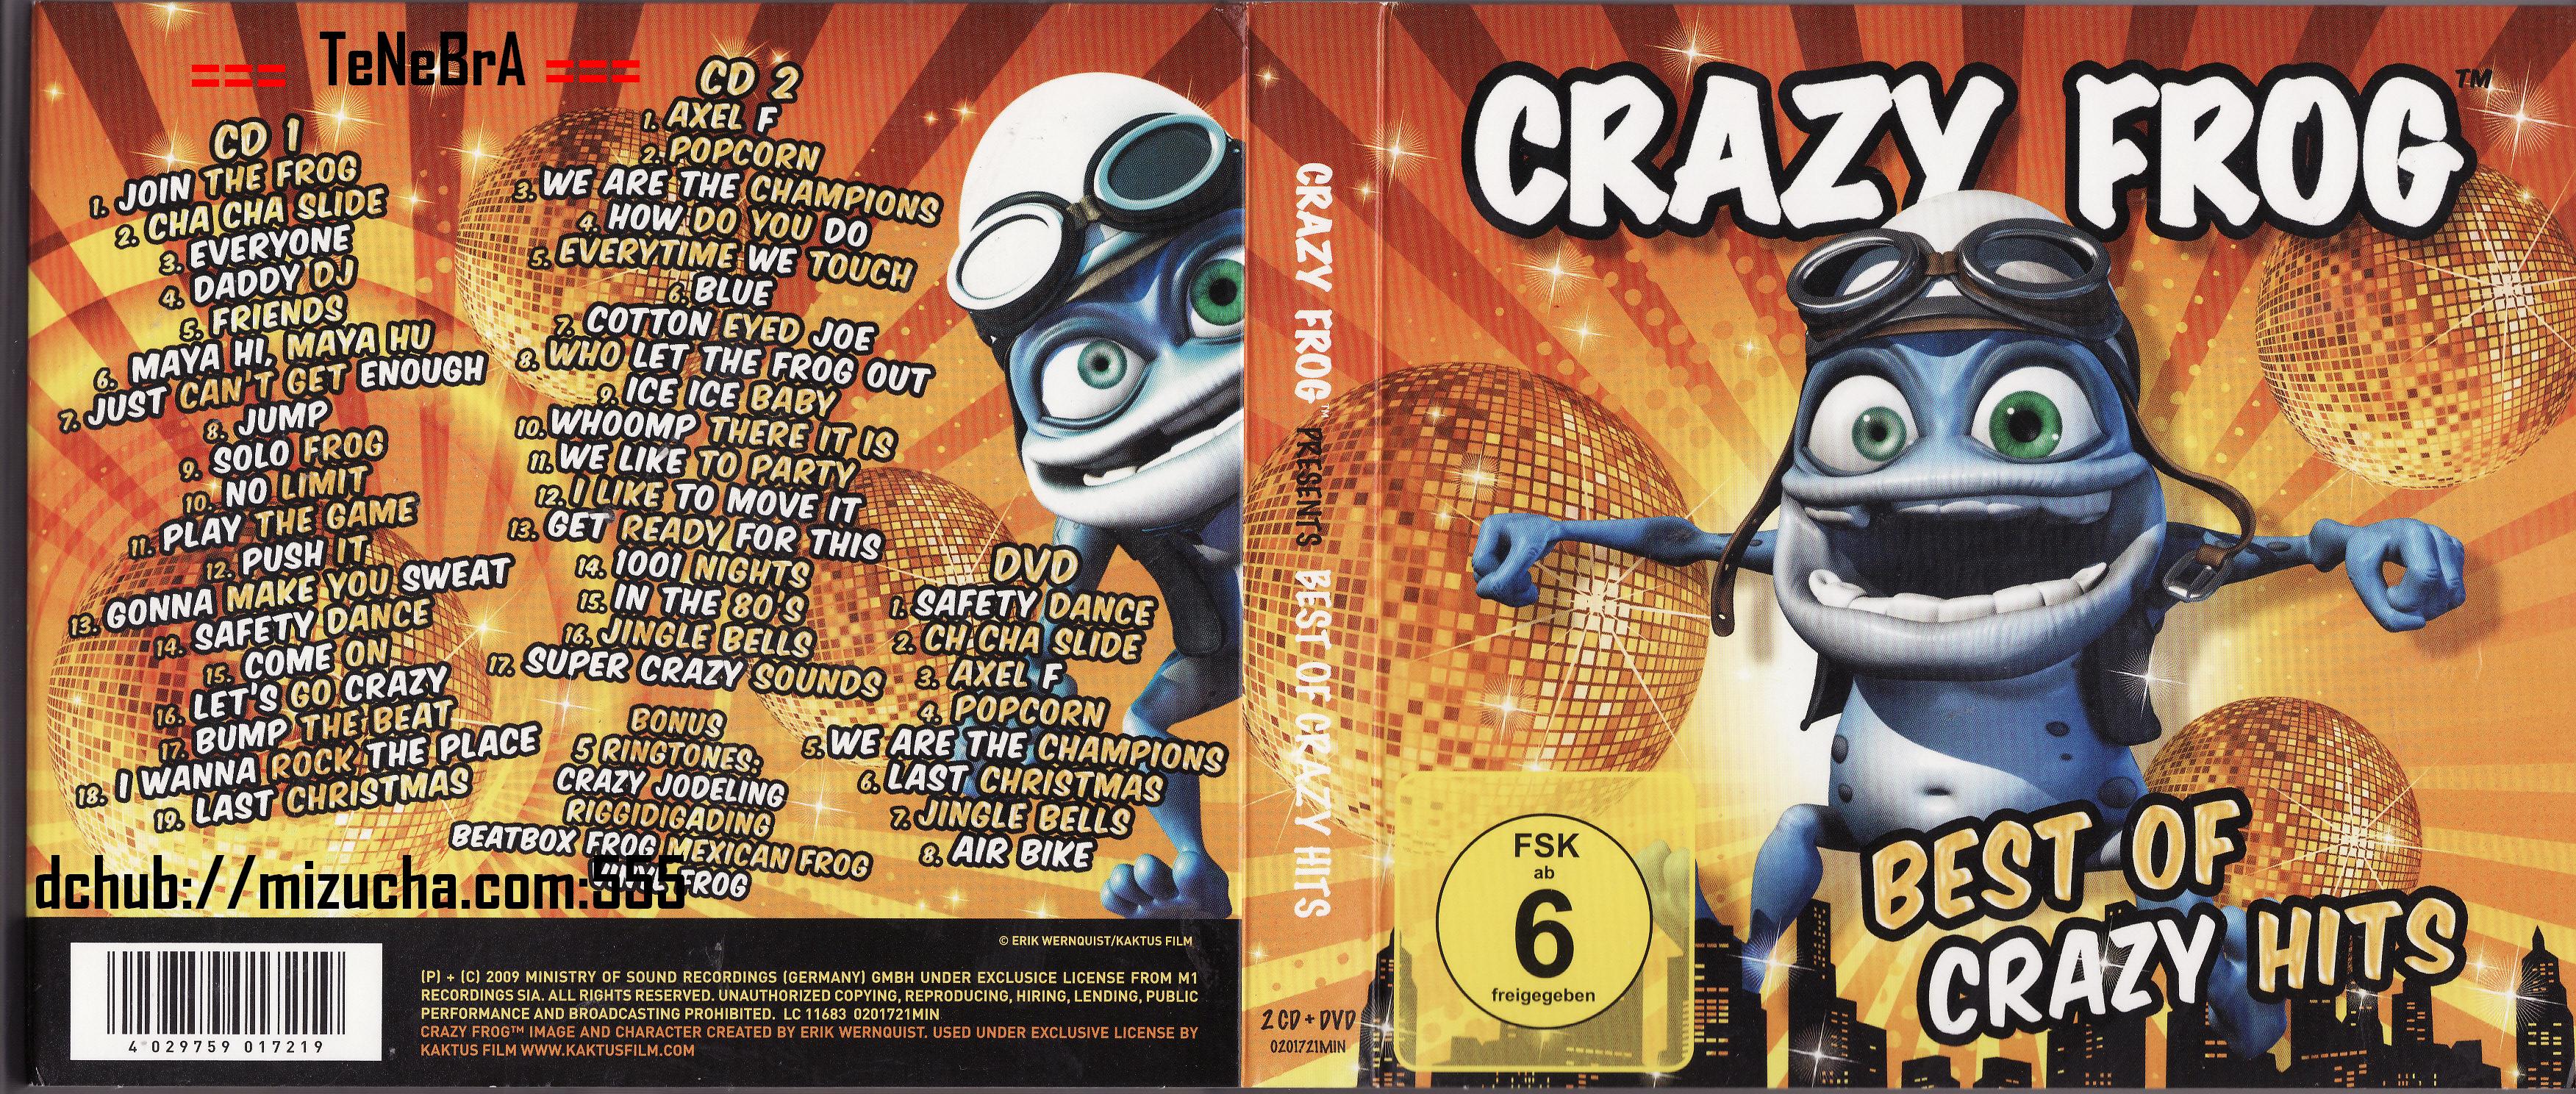 Crazy Frog - Best of Crazy Hits 2CD 2009 - 000_crazy_frog-best_of_crazy_hits-2cd-2009-cover.jpg